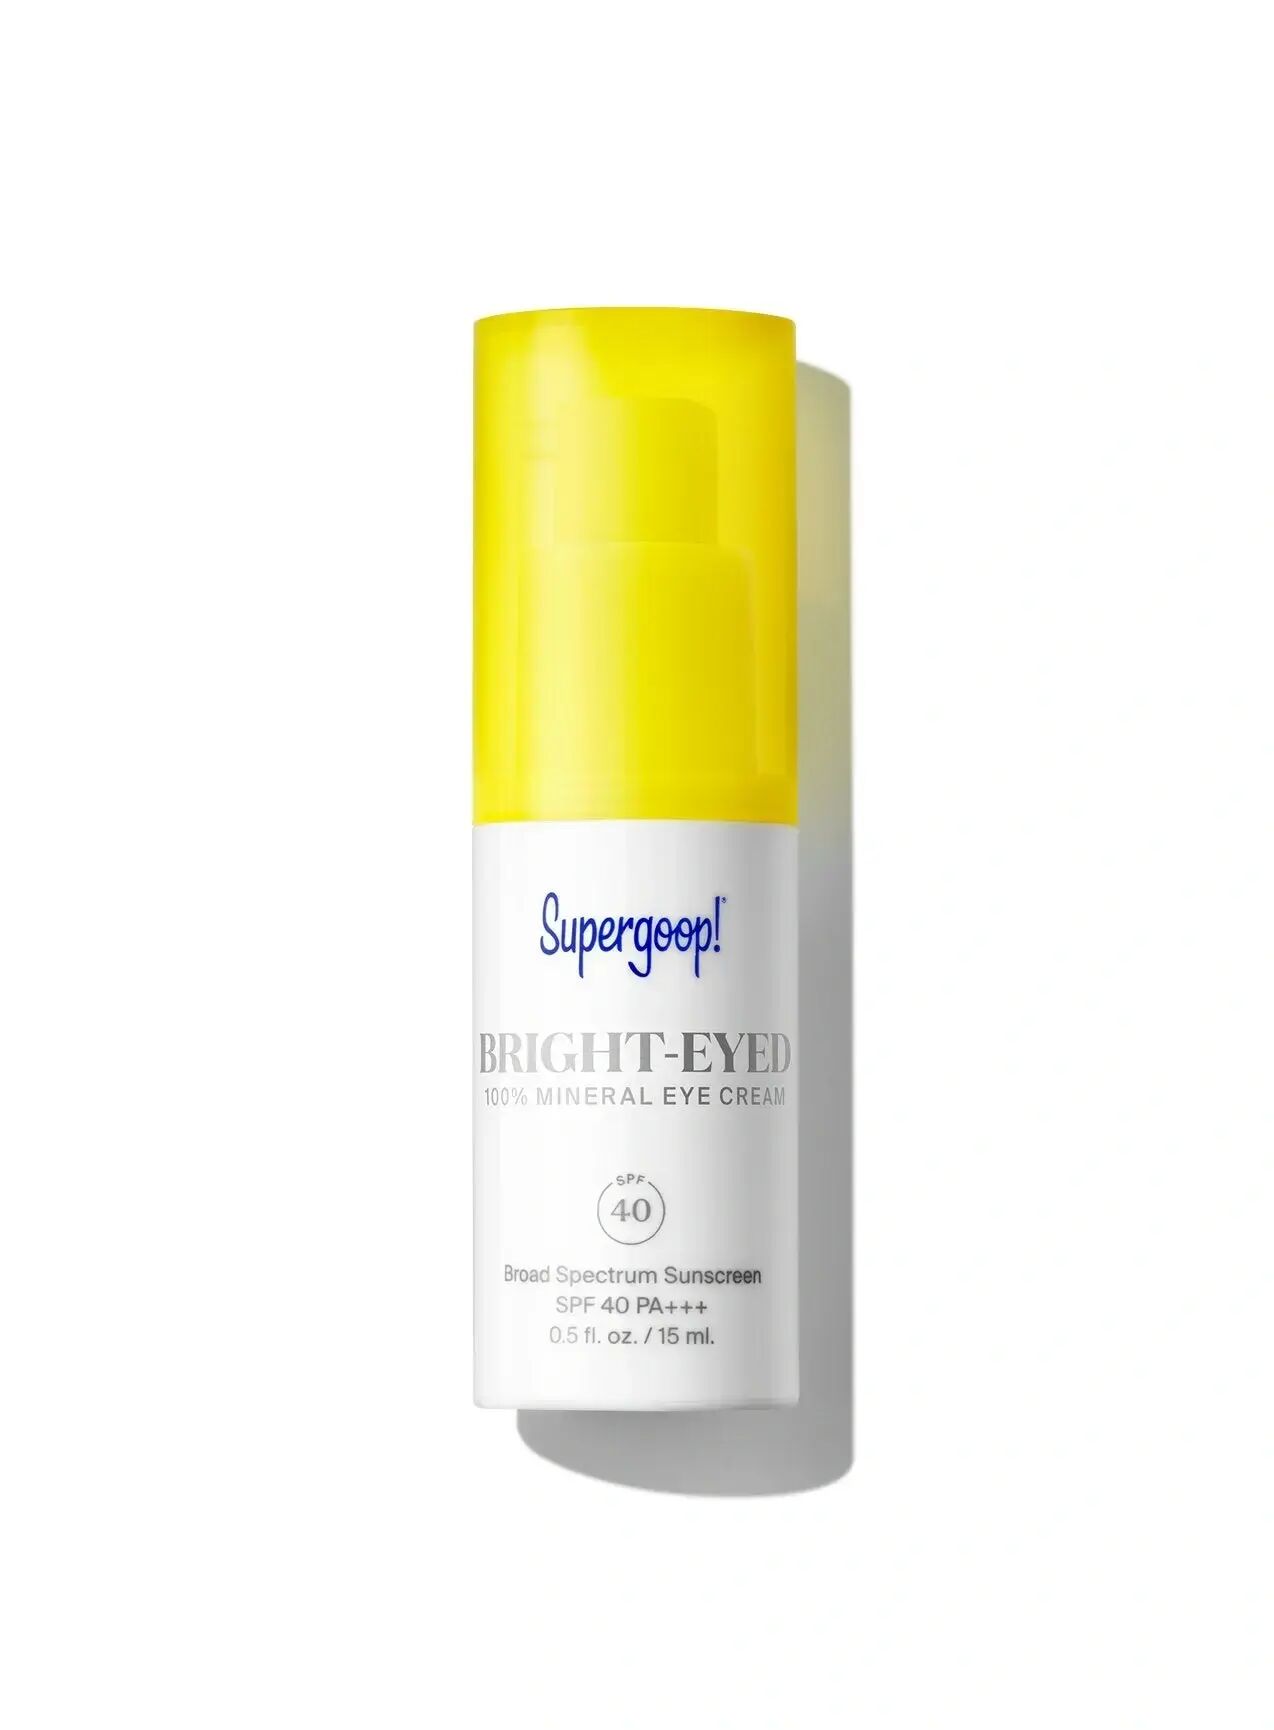 Supergoop! - Bright-Eyed 100% Mineral Eye Cream SPF 40